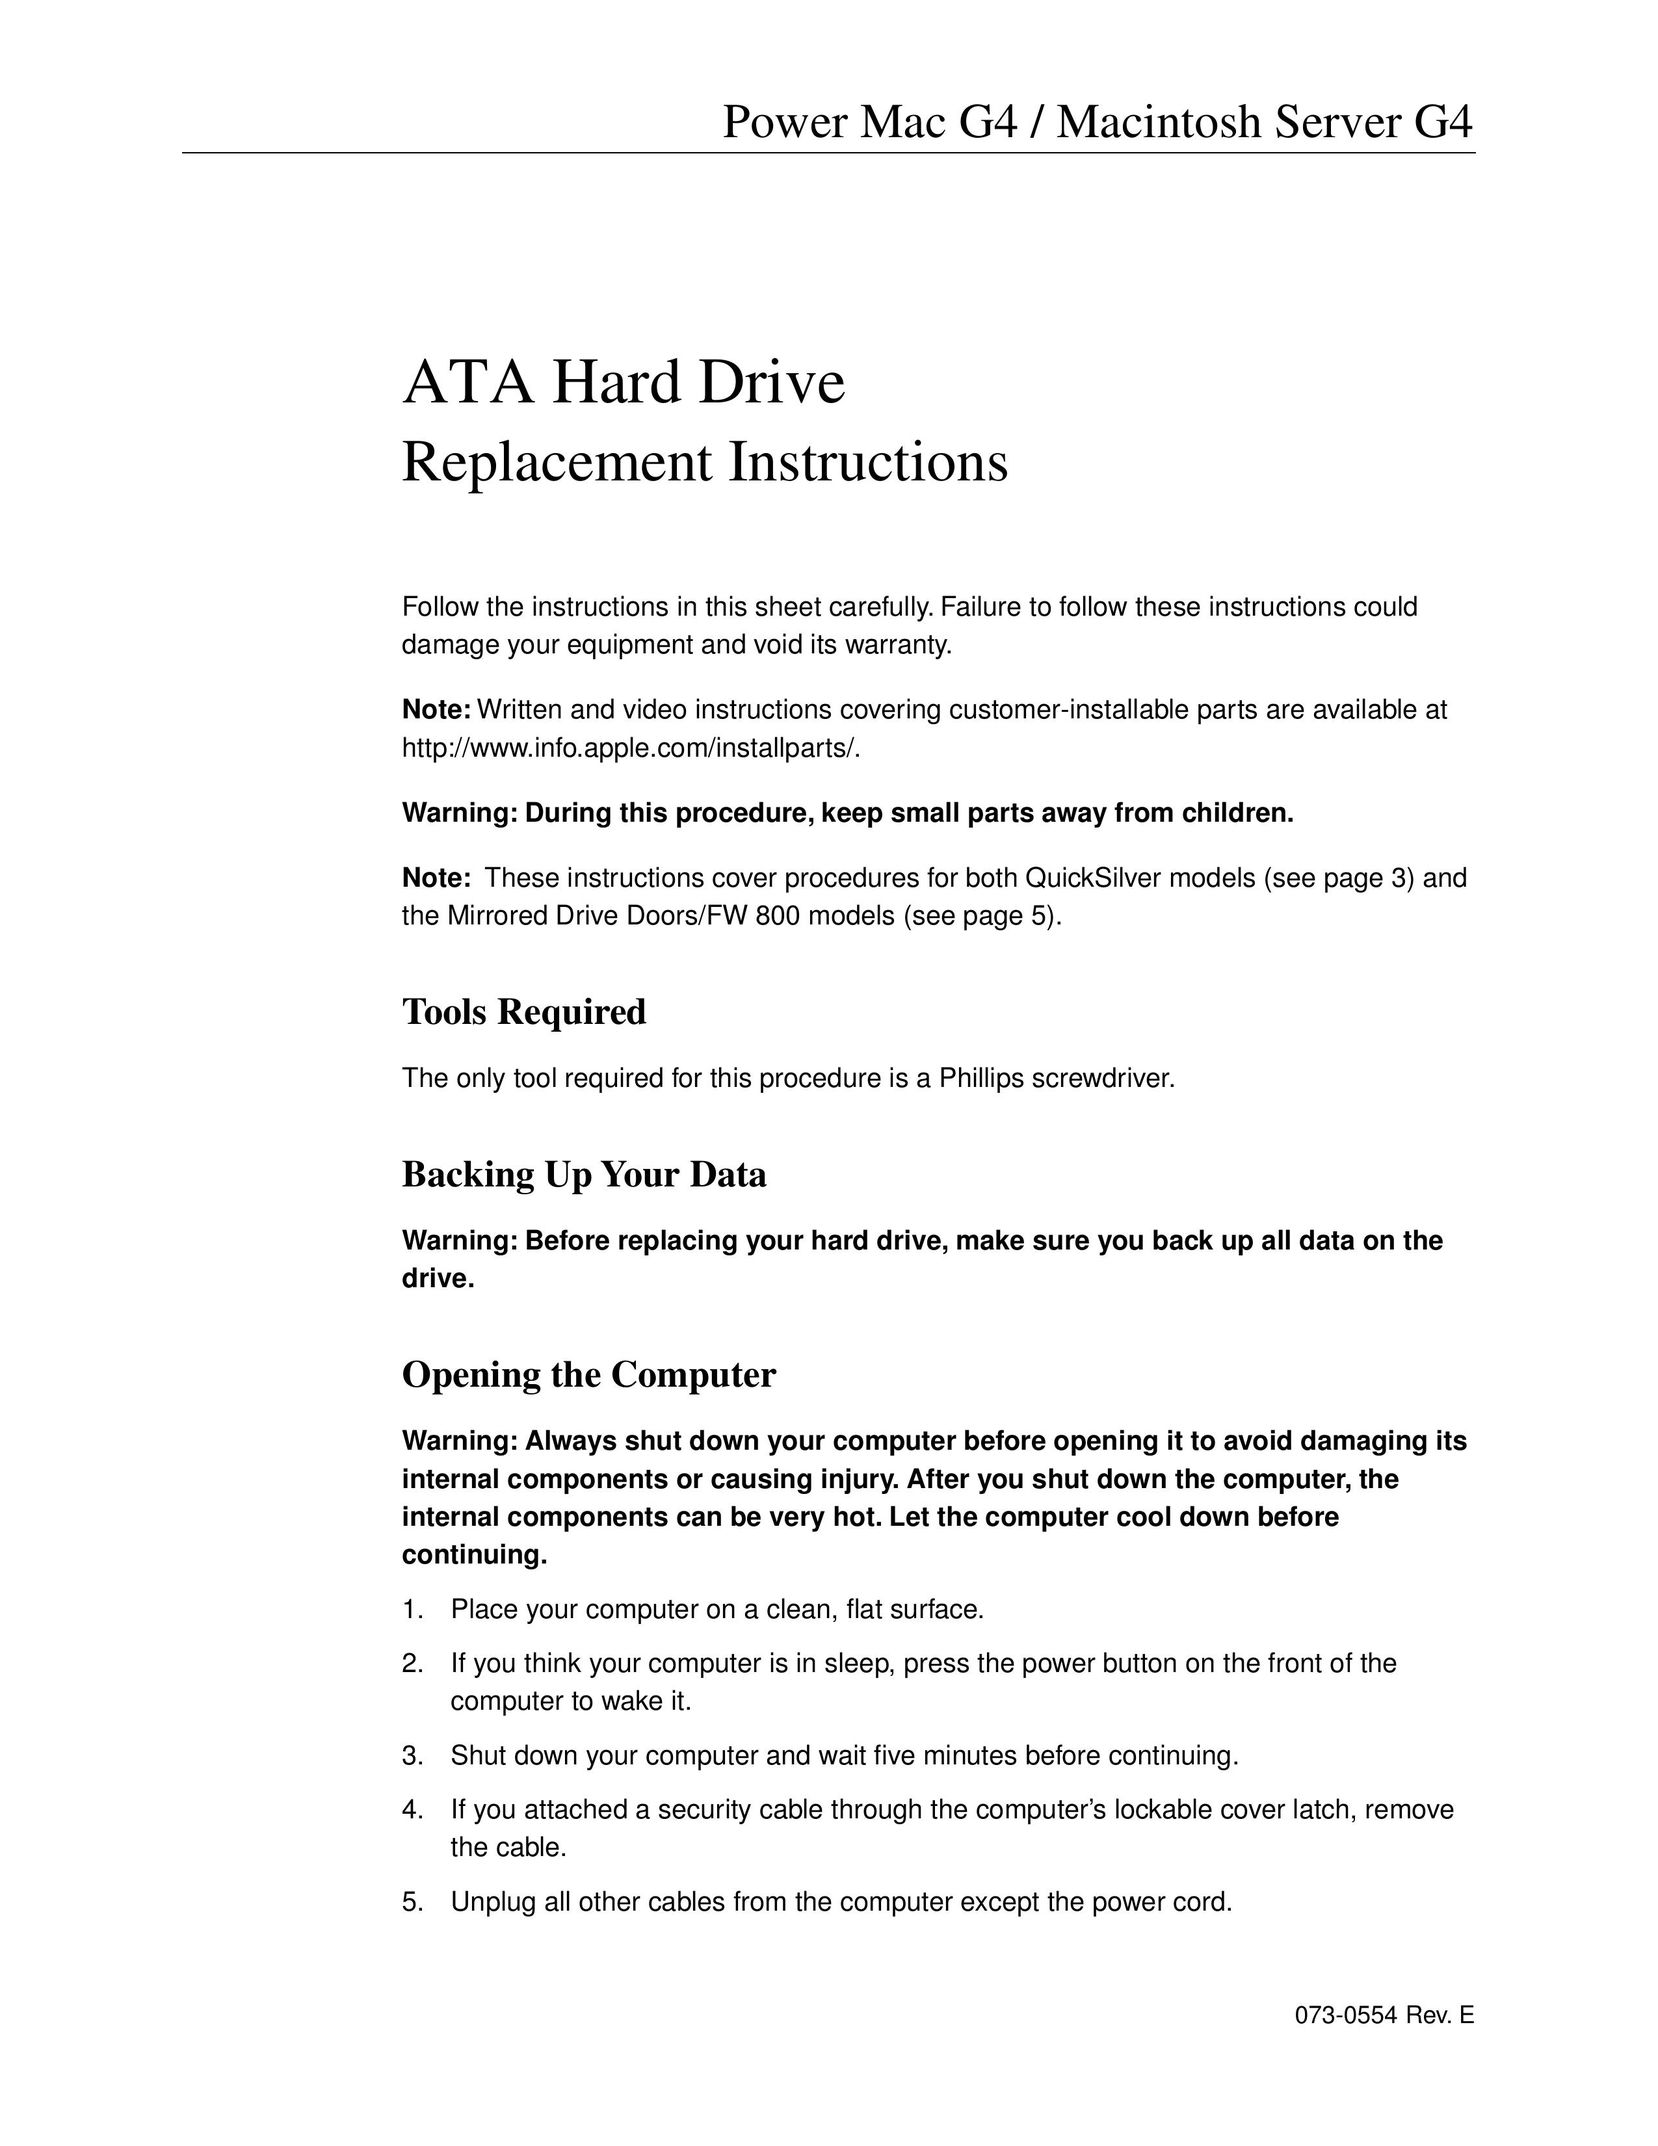 Apple ATA Hard Drive Computer Drive User Manual